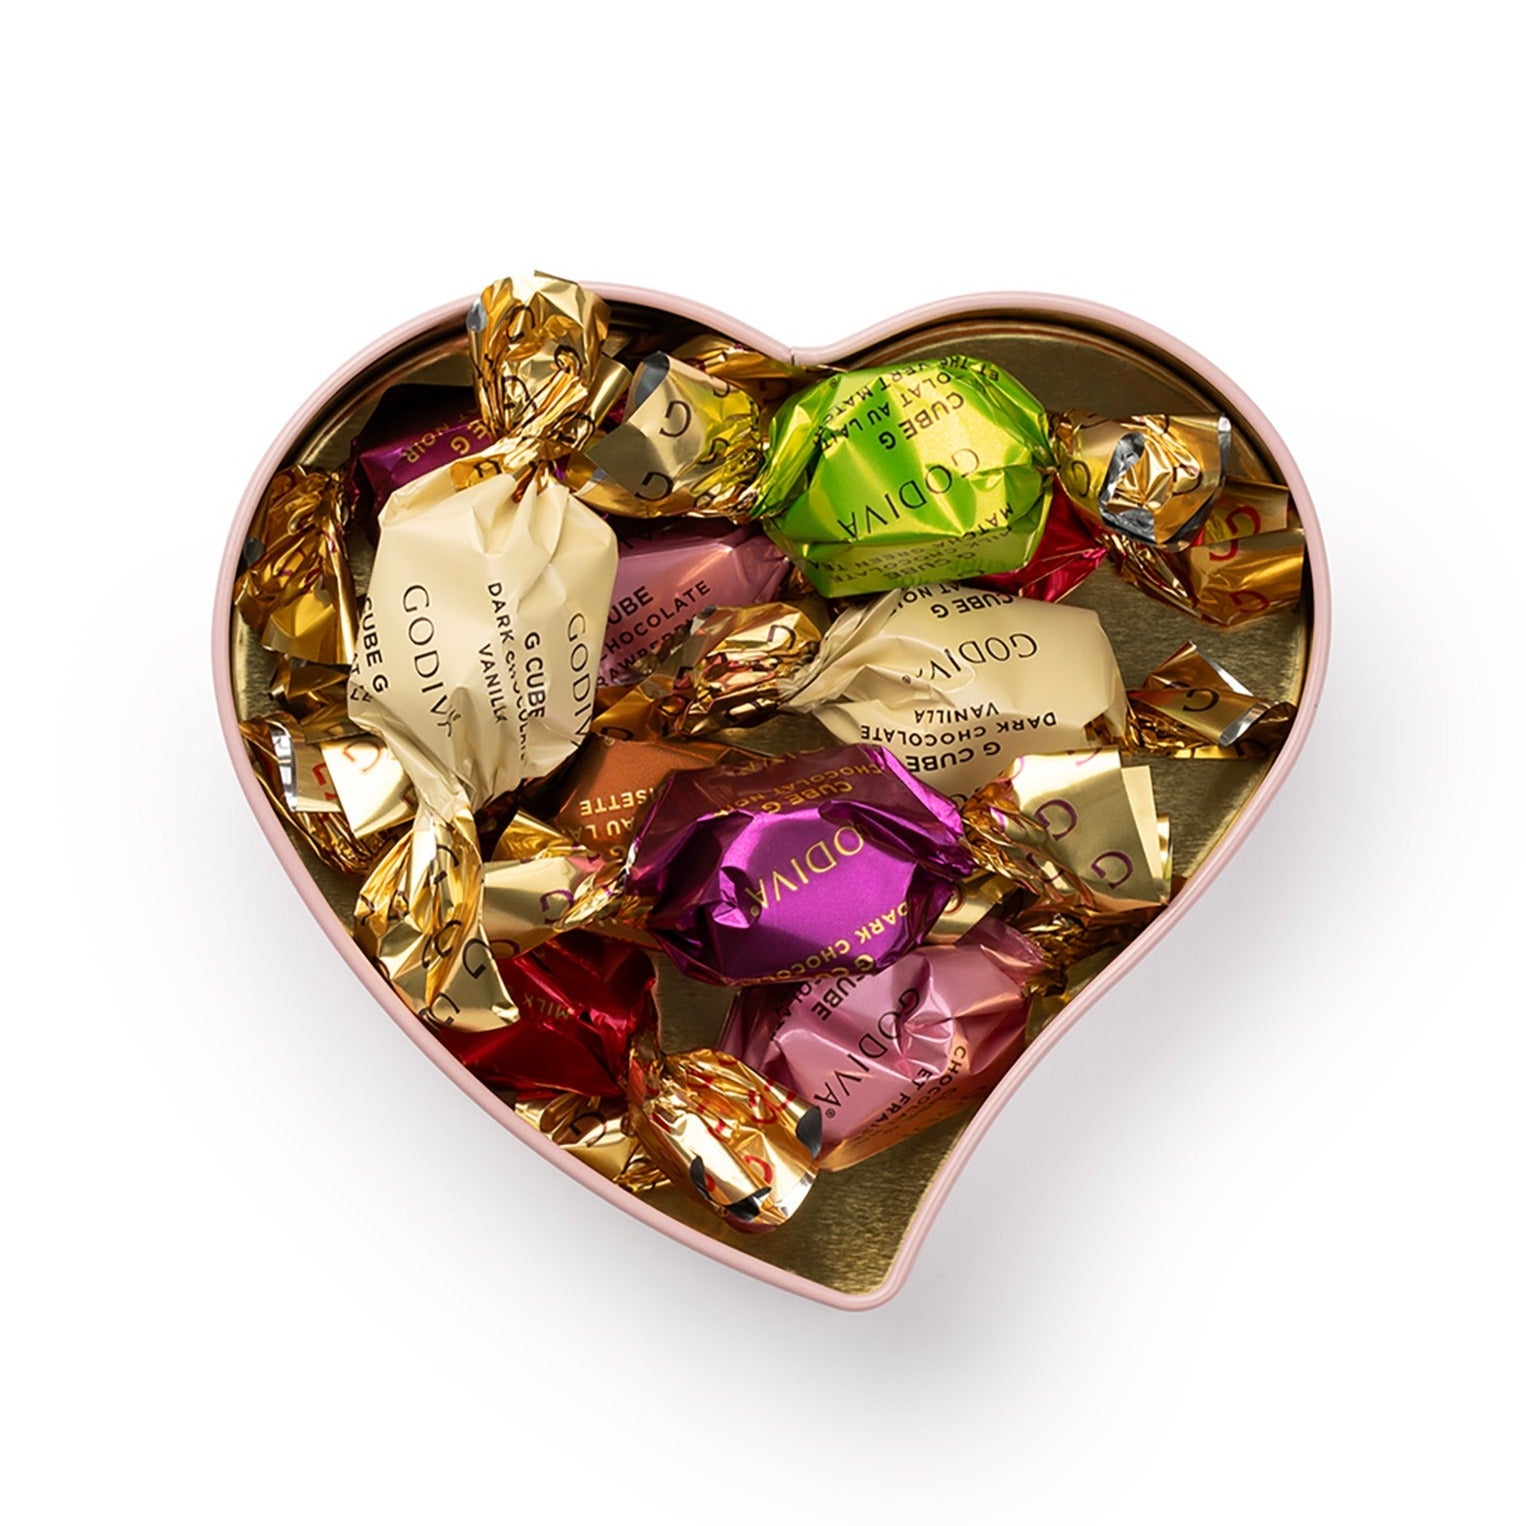 g-cube-chocolate-truffle-valentines-day-gift-box-tin-3-open.jpg